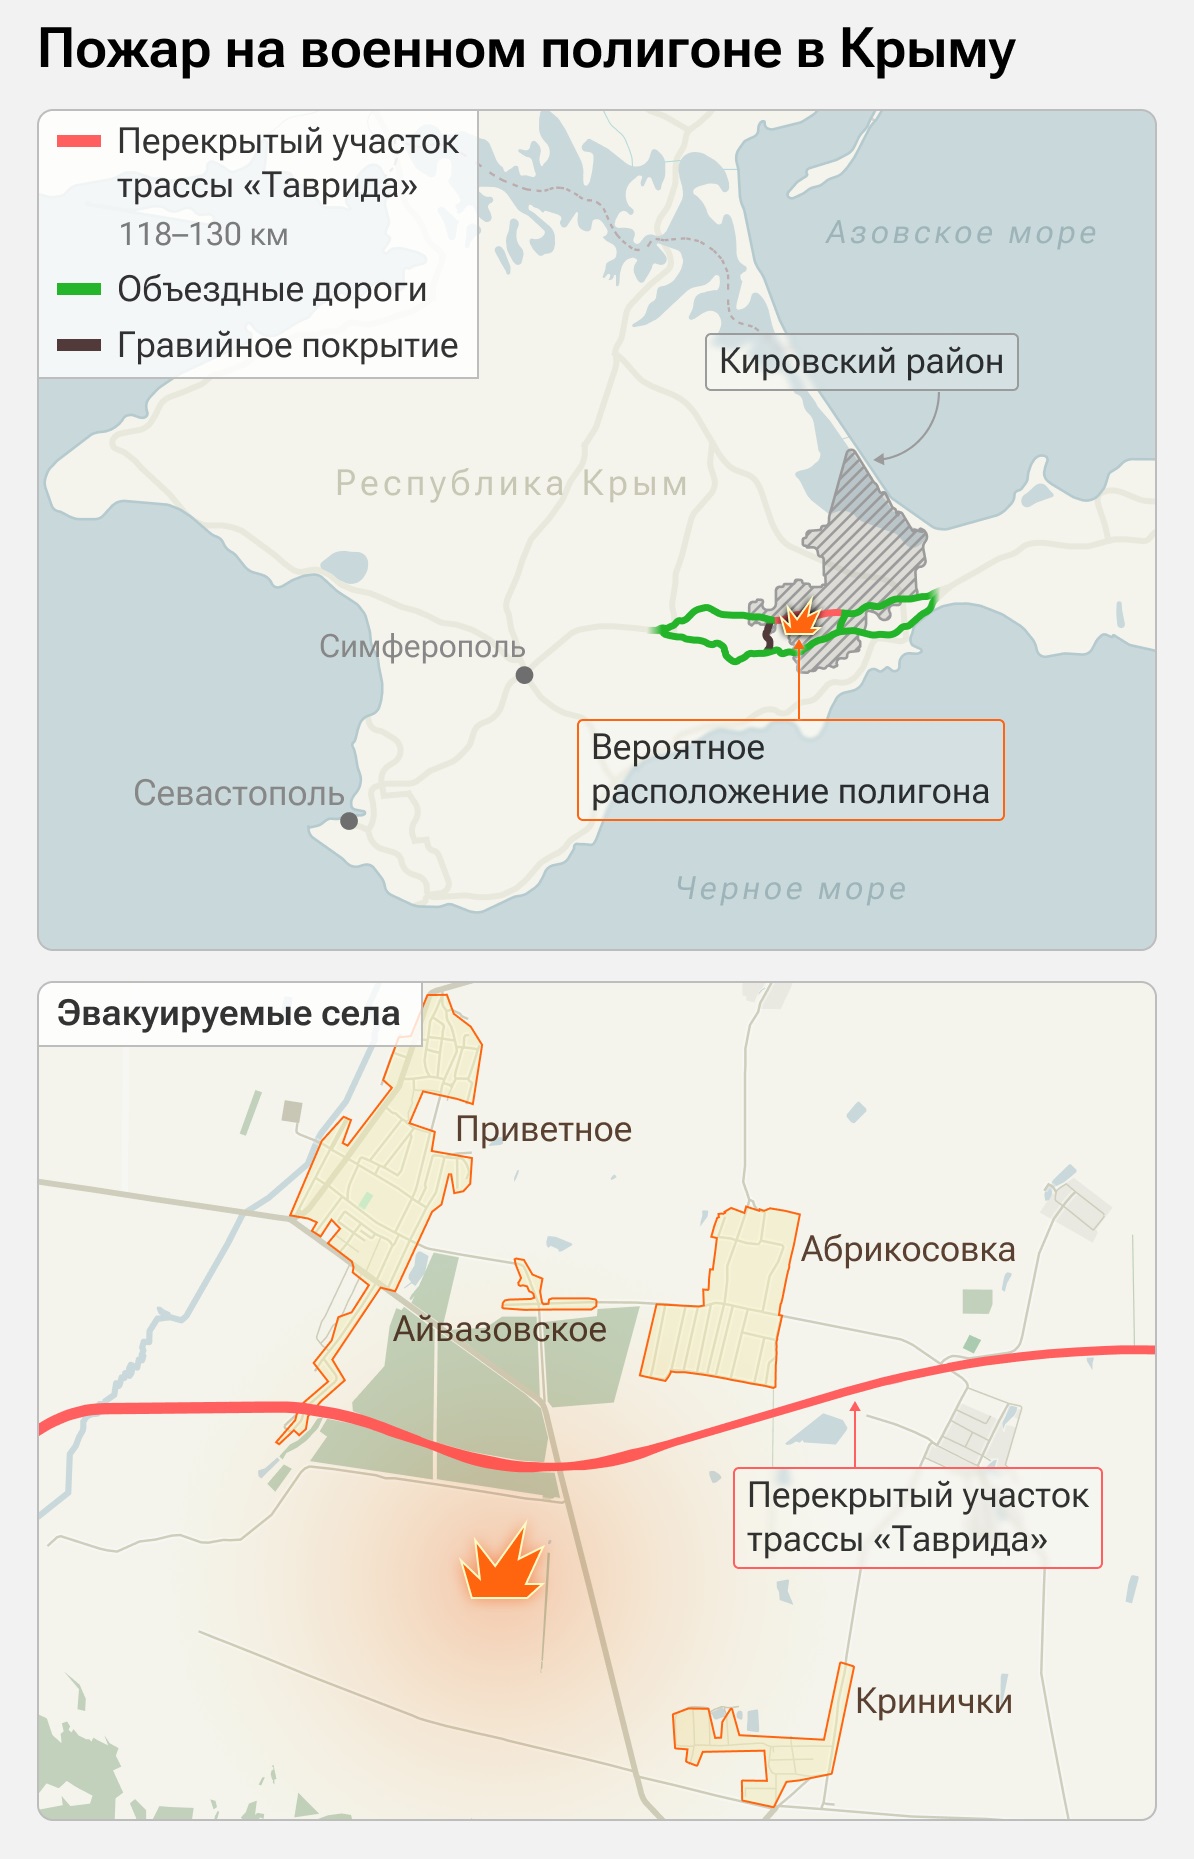 В Крыму возобновили движение машин по трассе «Тарвида»